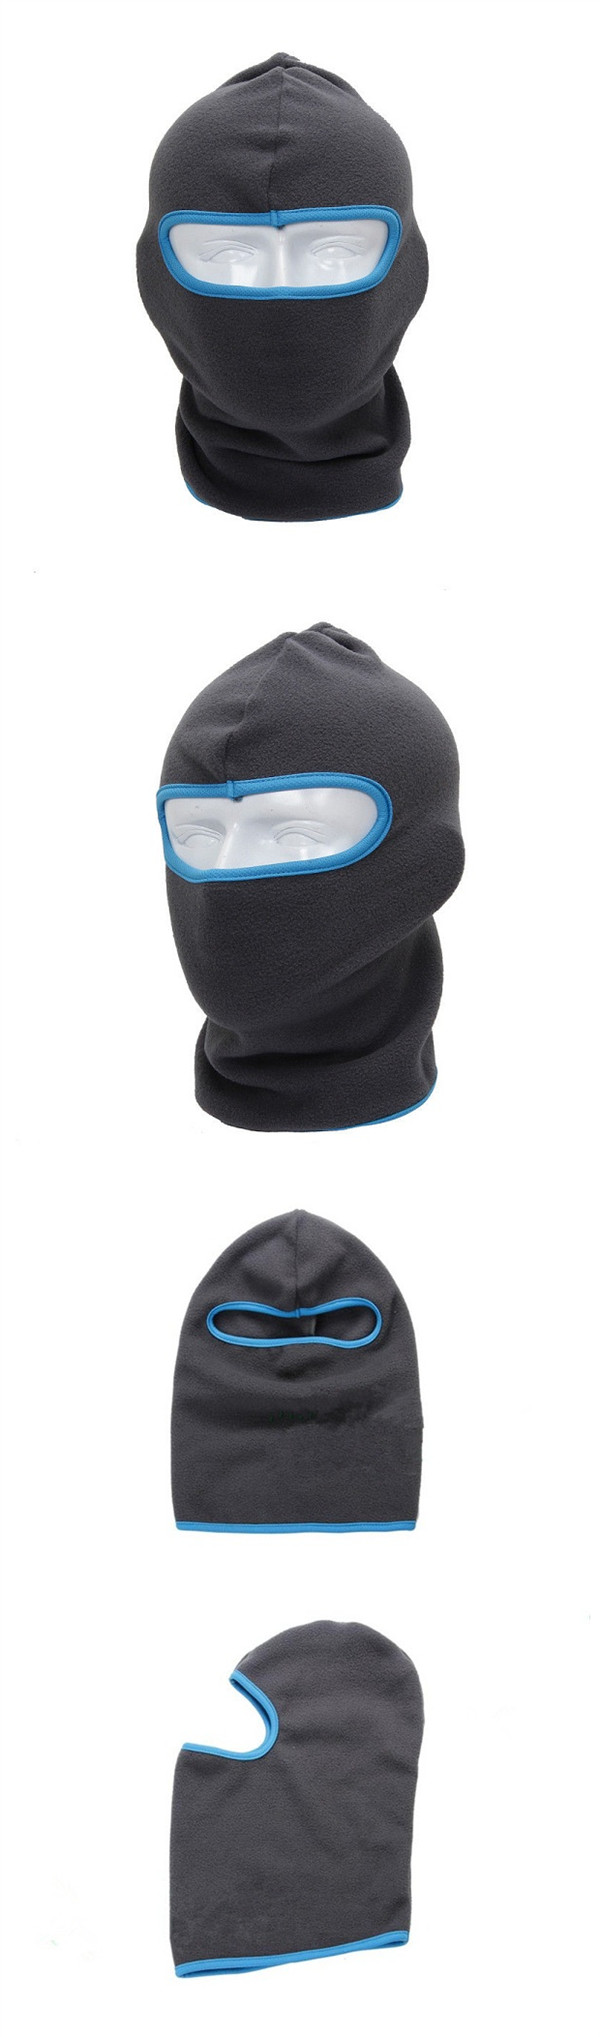 Warm-Full-Neck-Face-Cover-Skiing-Cycling-Snowboard-Cap-Ski-Mask-Beanie-CS-Hat-Hood-1010616-4